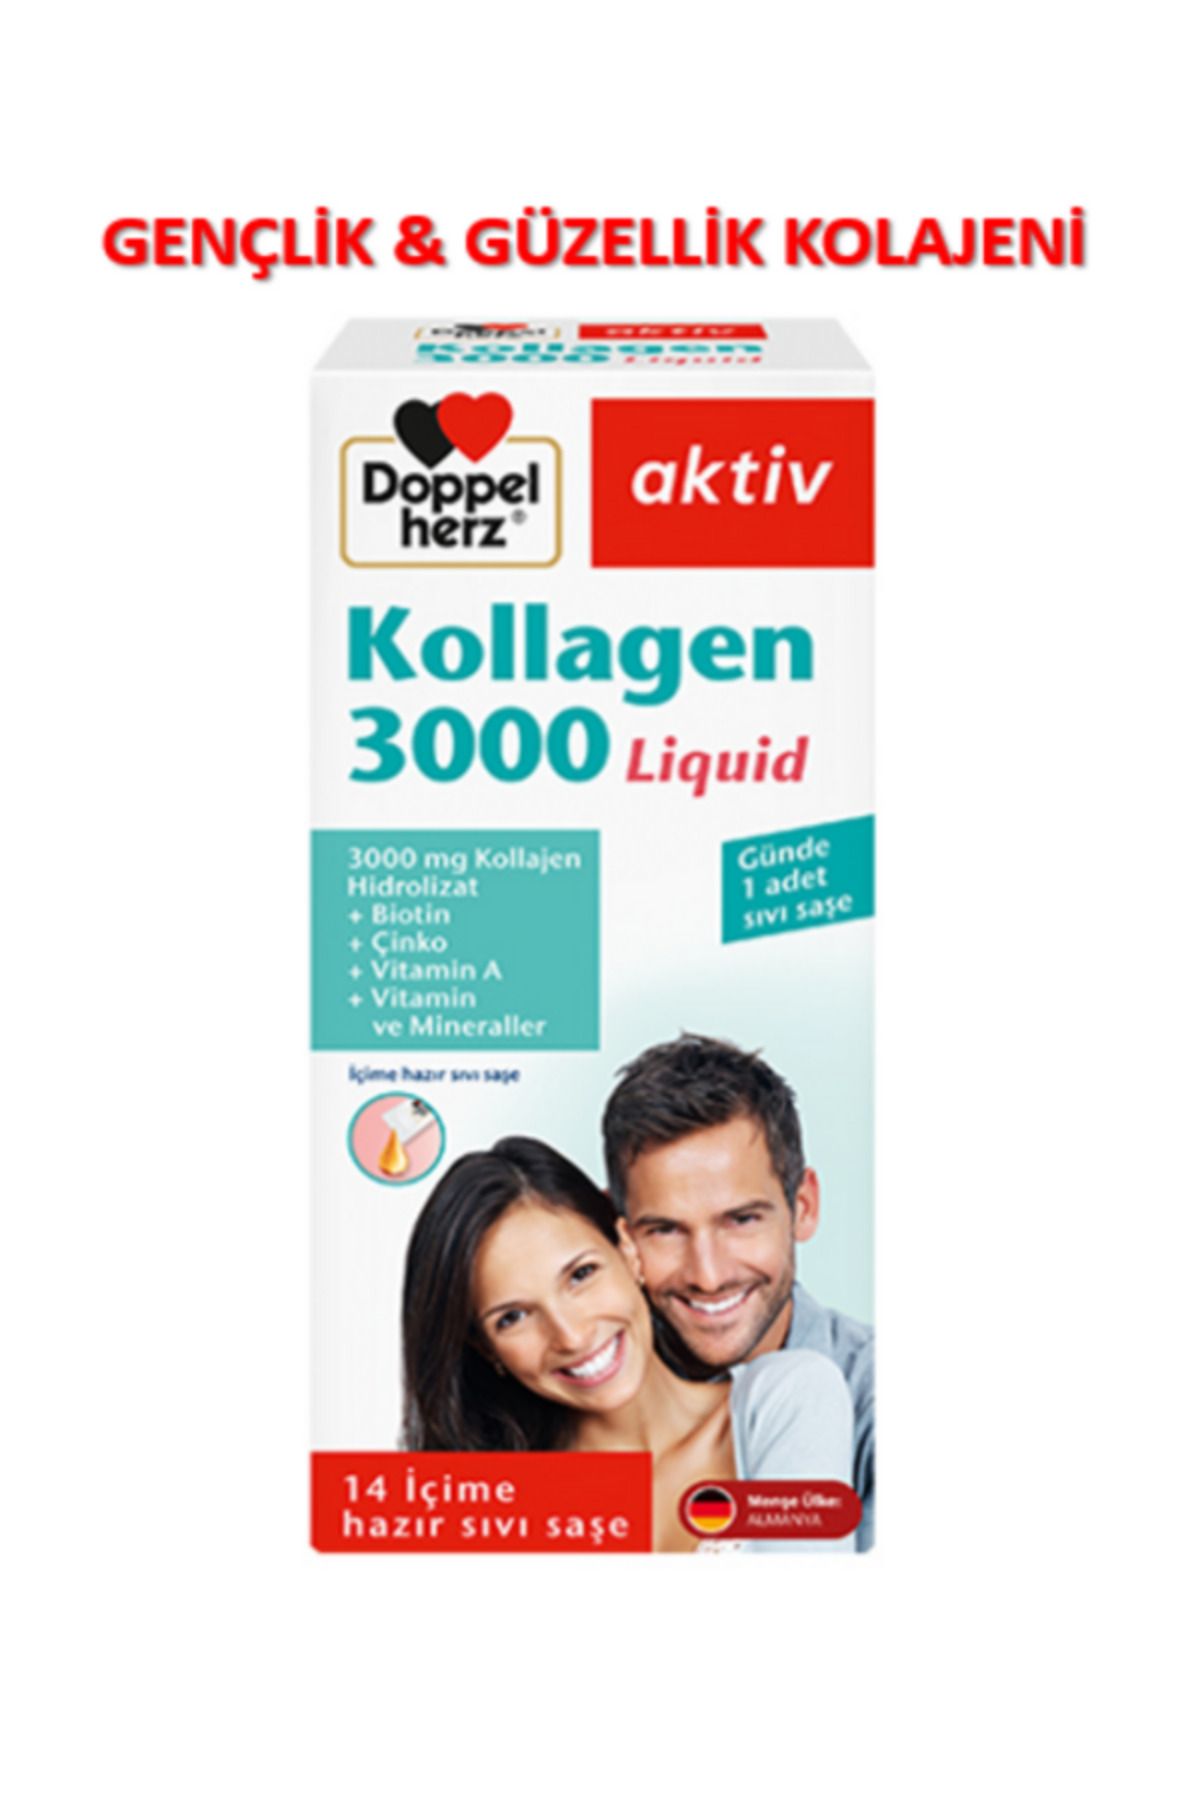 Doppelherz Aktiv Kollagen 3000 Liquid / 14 sıvı saşe